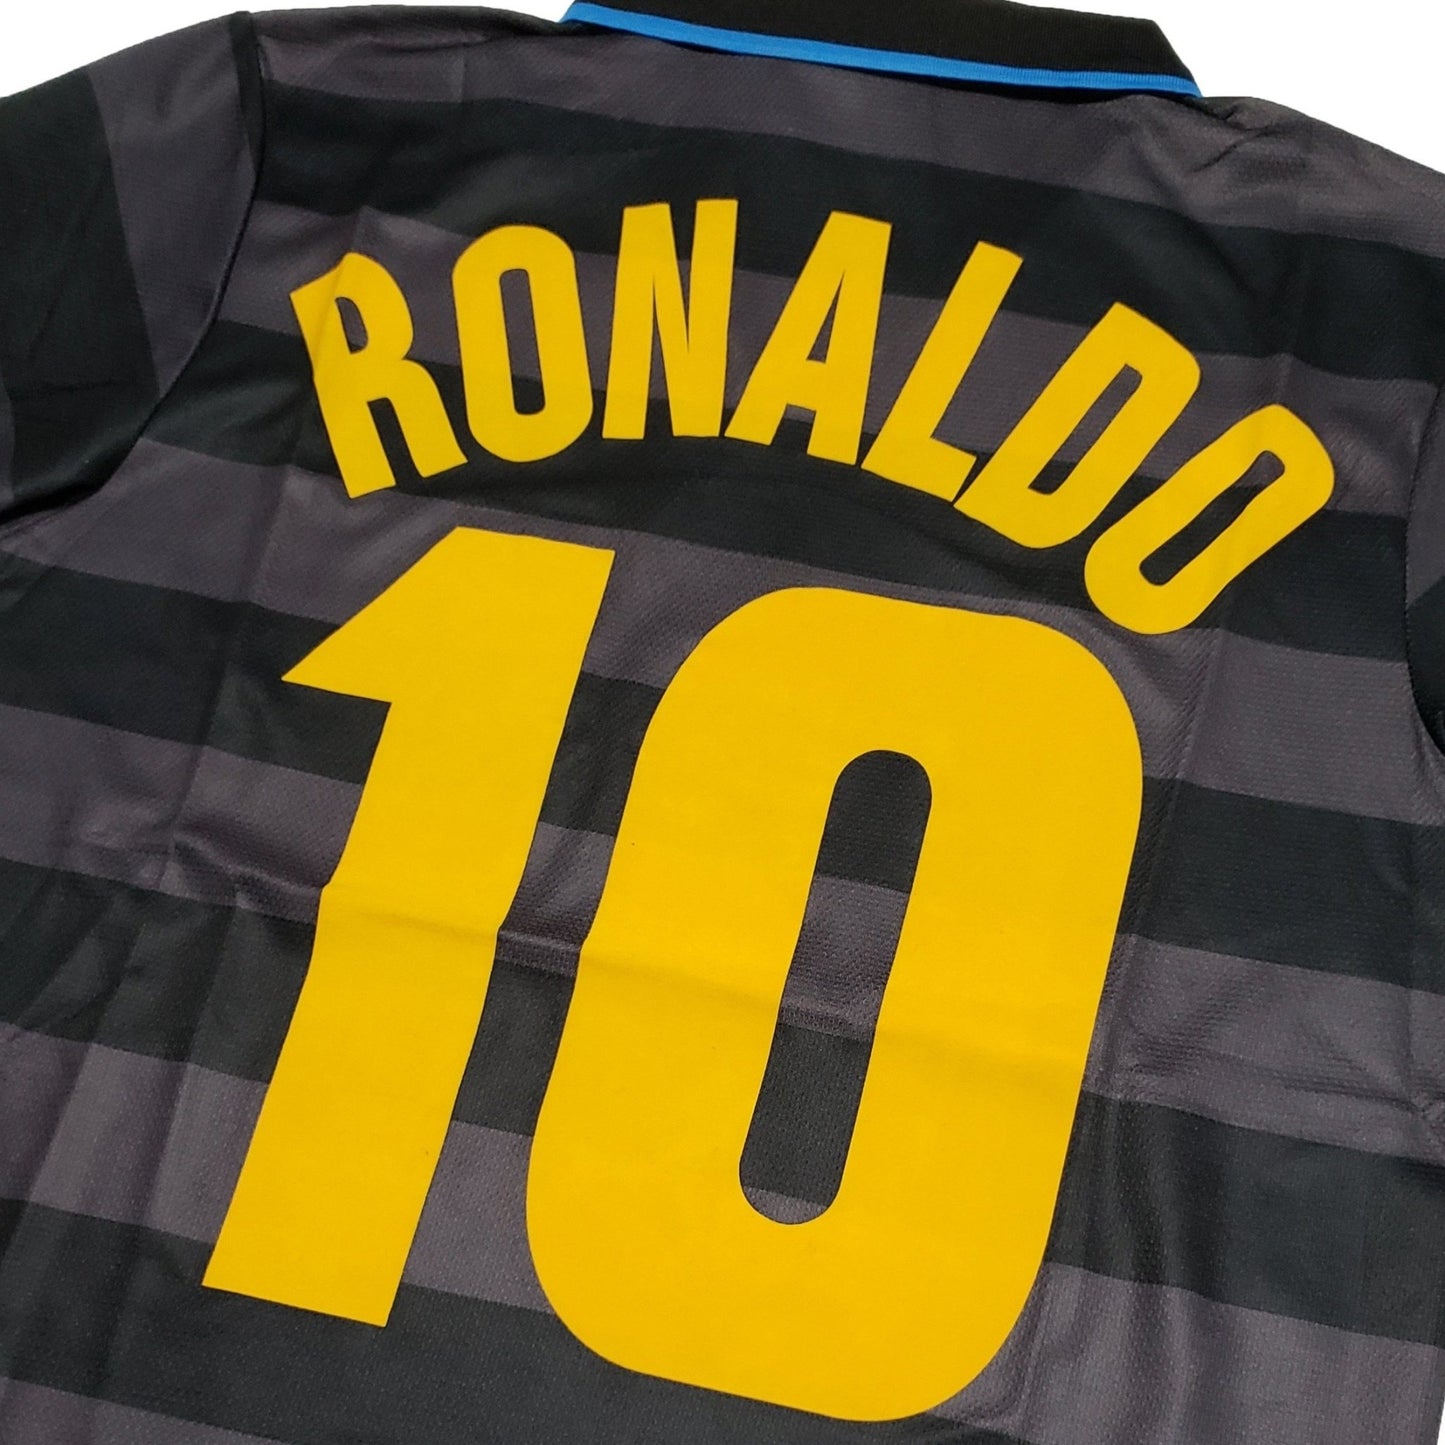 Inter suplente 1998 - Ronaldo - Thunder Internacional